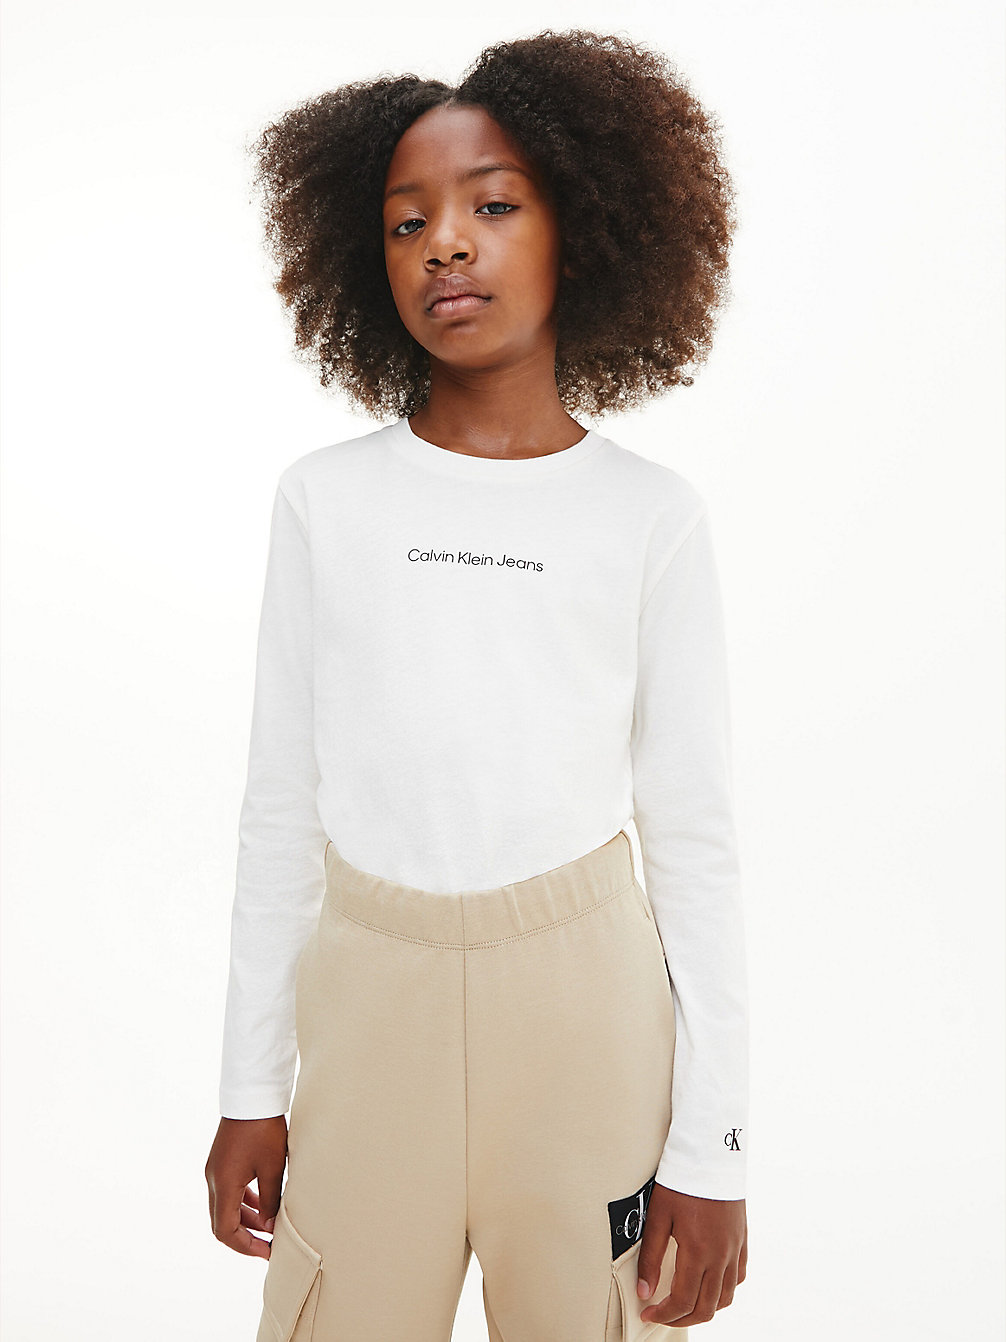 IVORY Organic Cotton Long Sleeve T-Shirt undefined girls Calvin Klein